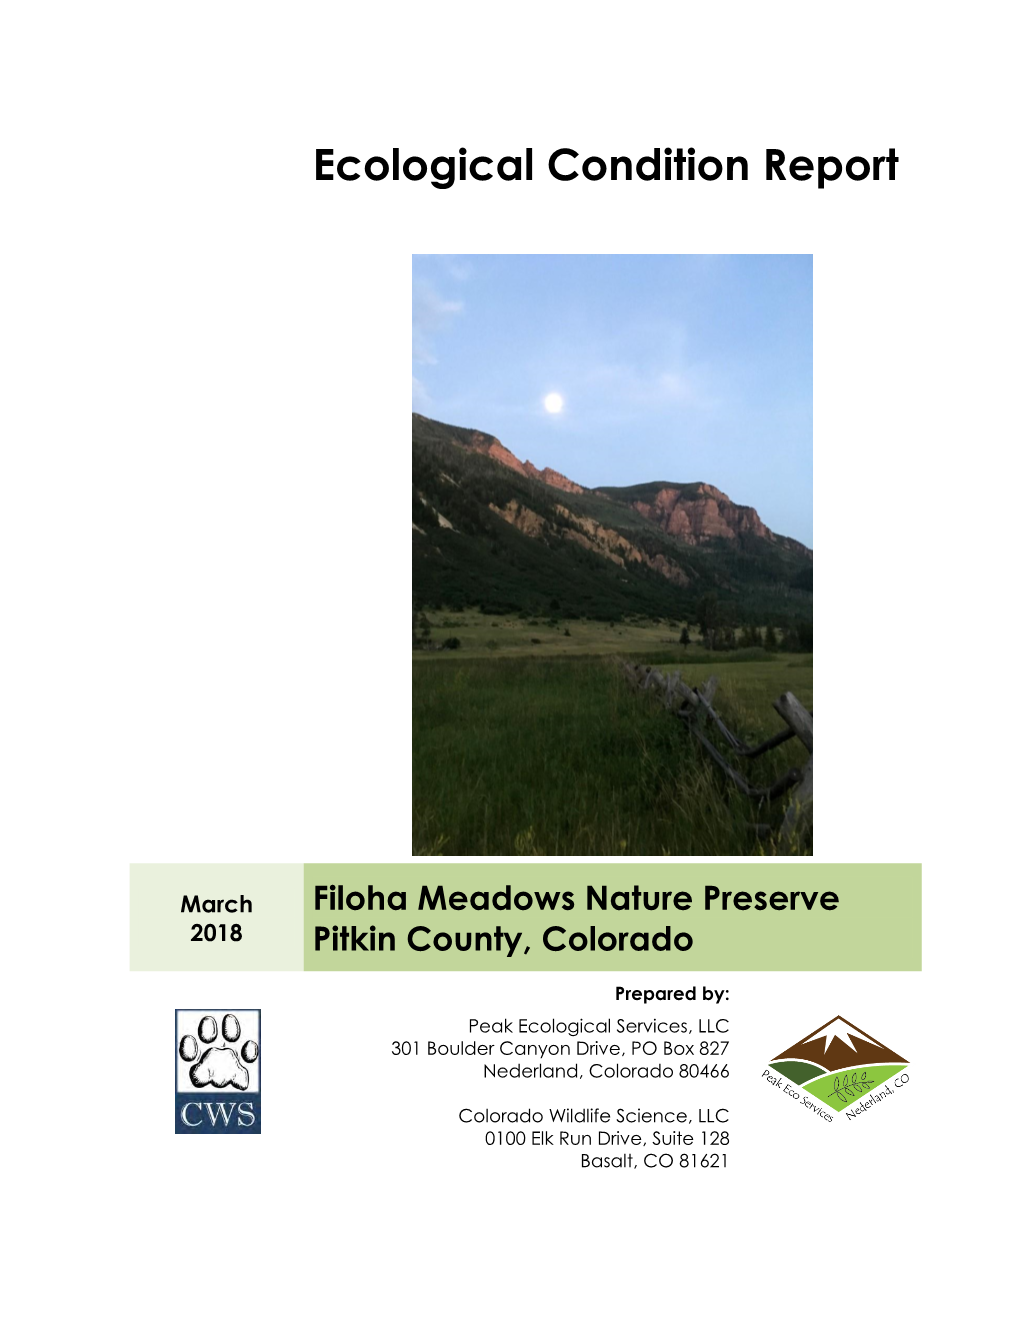 Filoha Meadows Ecological Condition Report